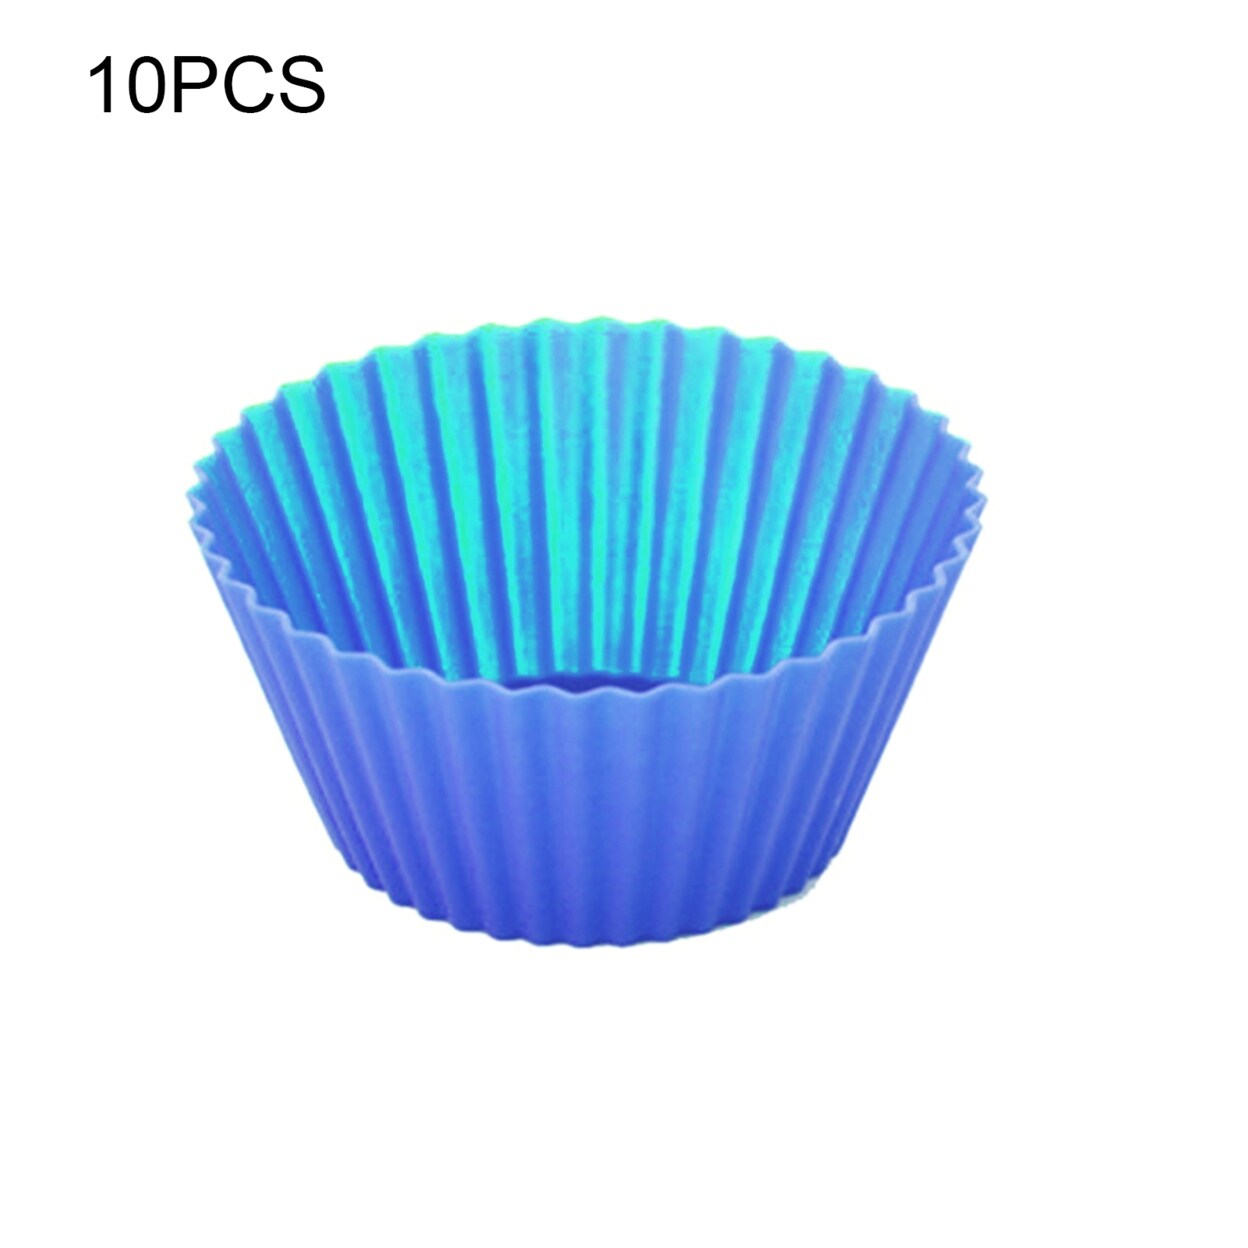 10PCS Non-Stick Baking Cups Silicone Cupcake Kitchen Baking Mold